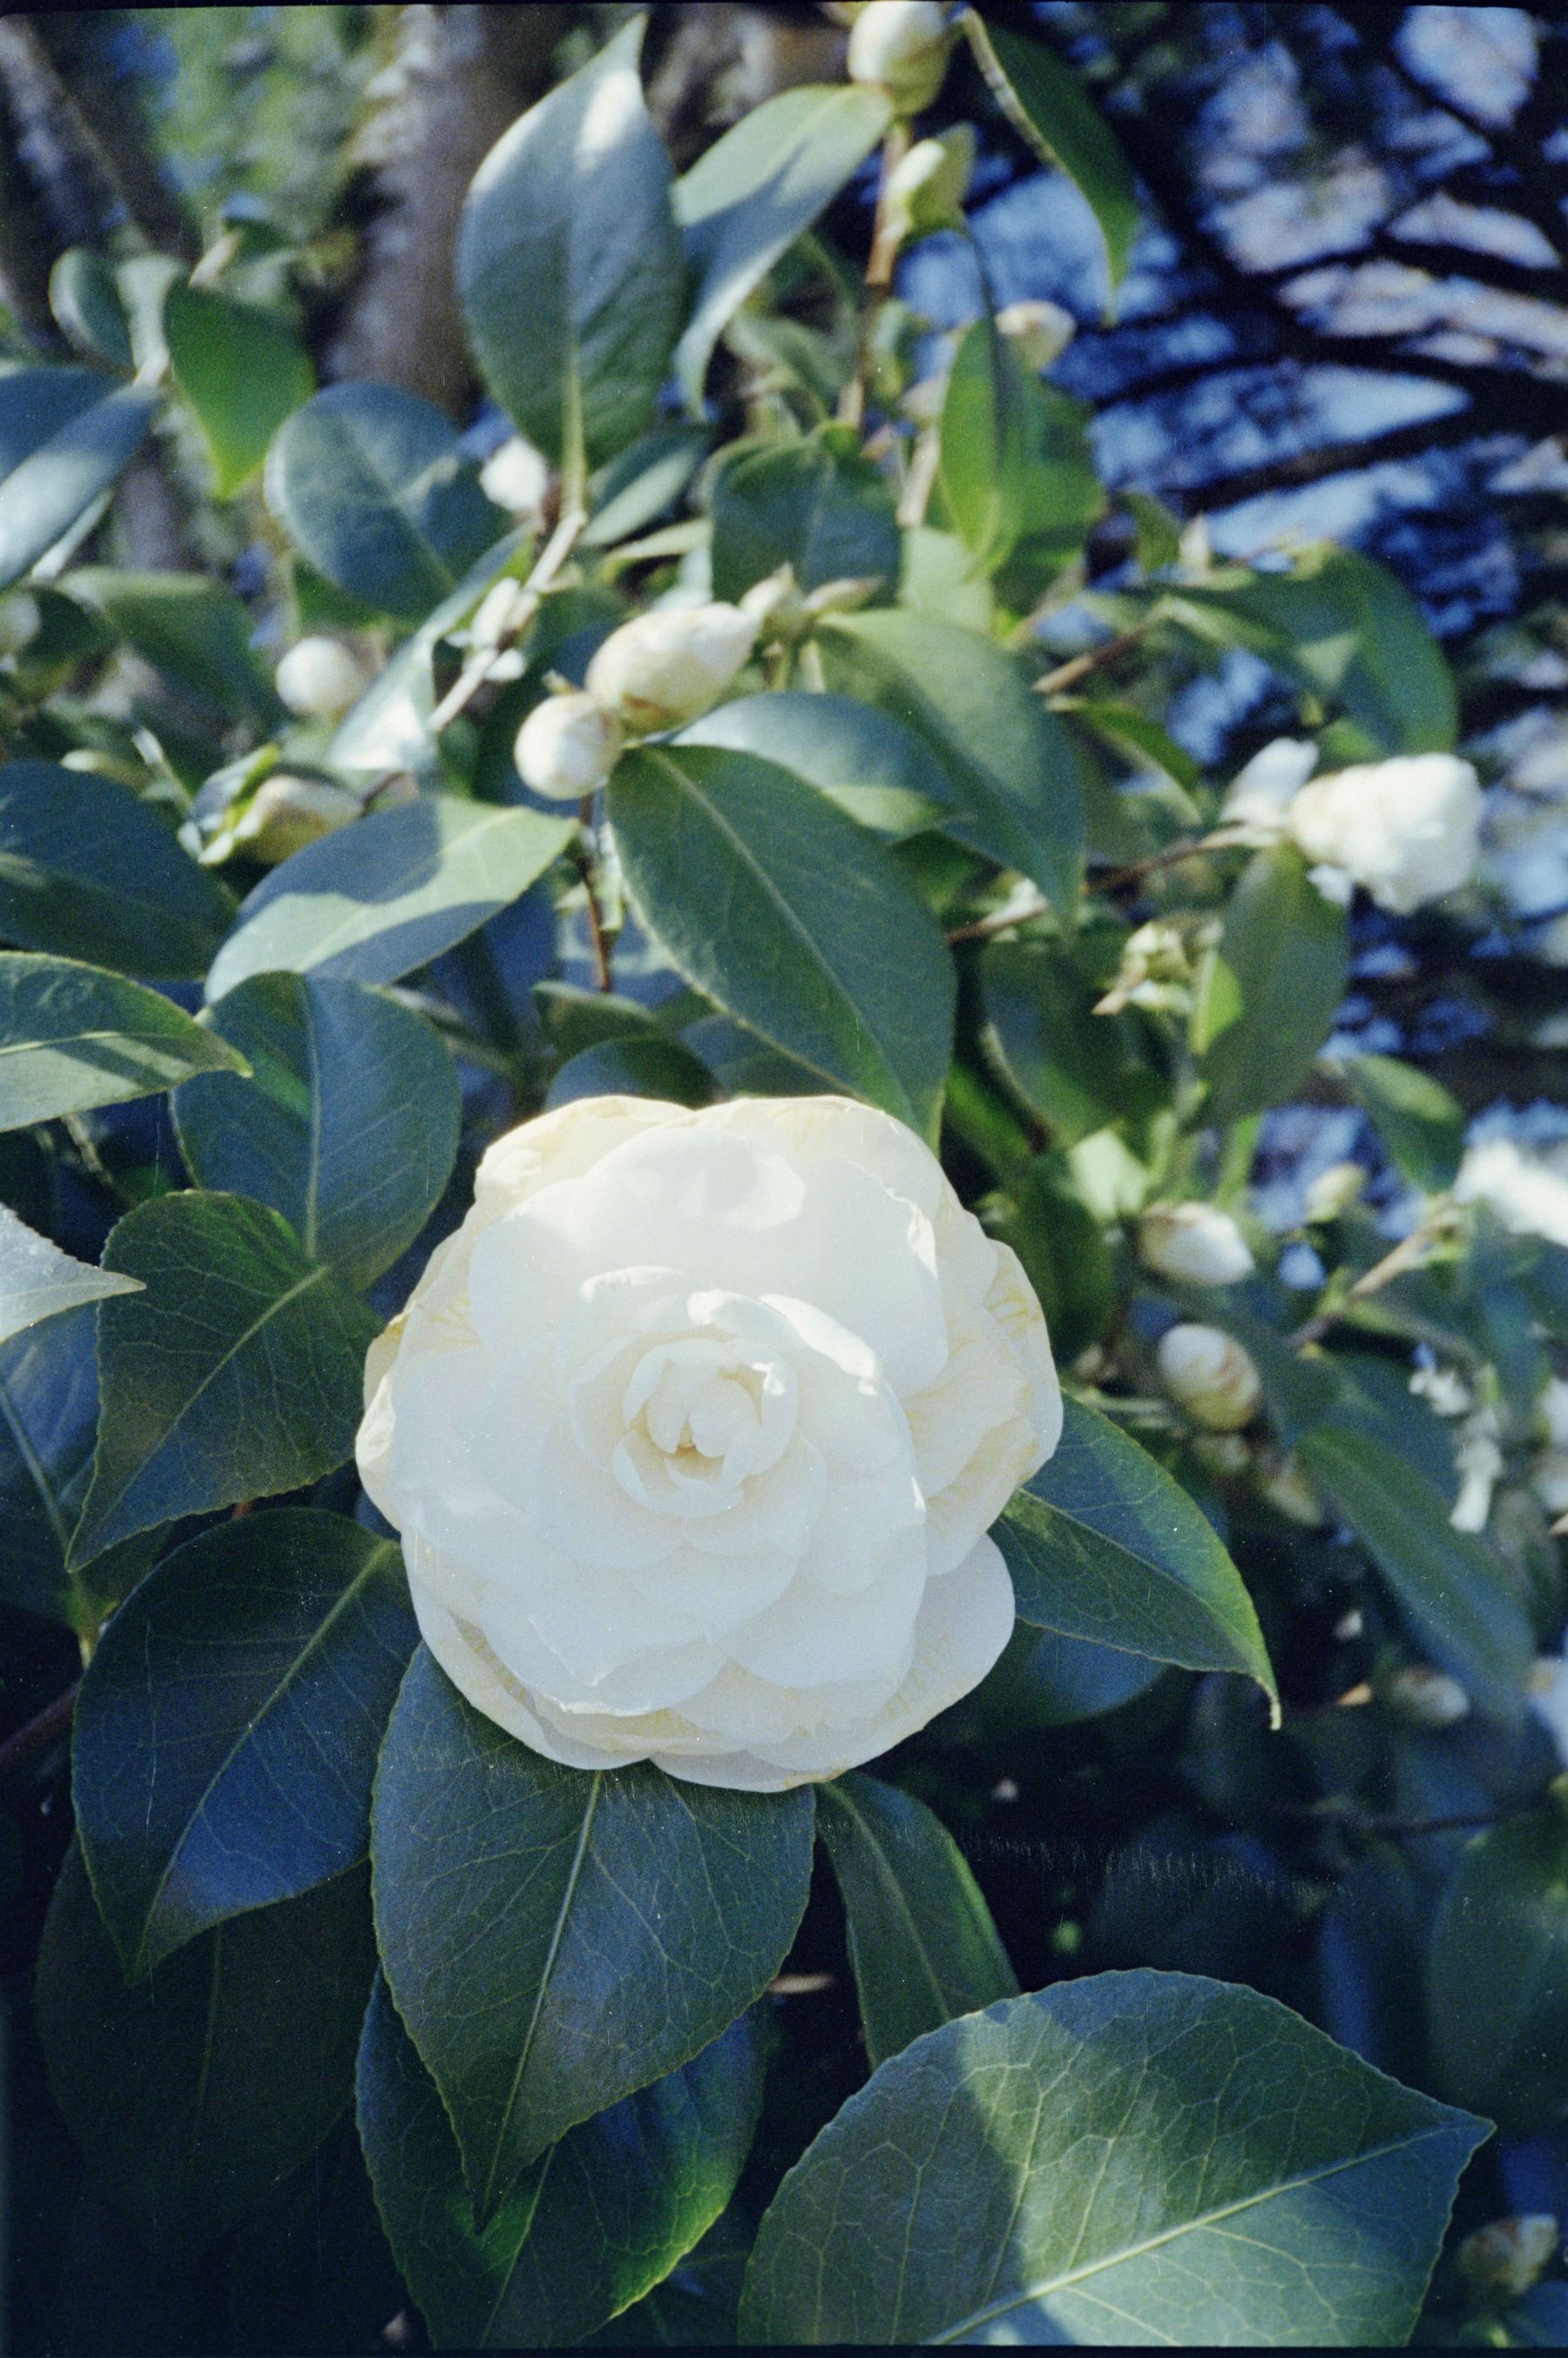 A close-up photo of a white rose, shot on Pentax Espio Mini